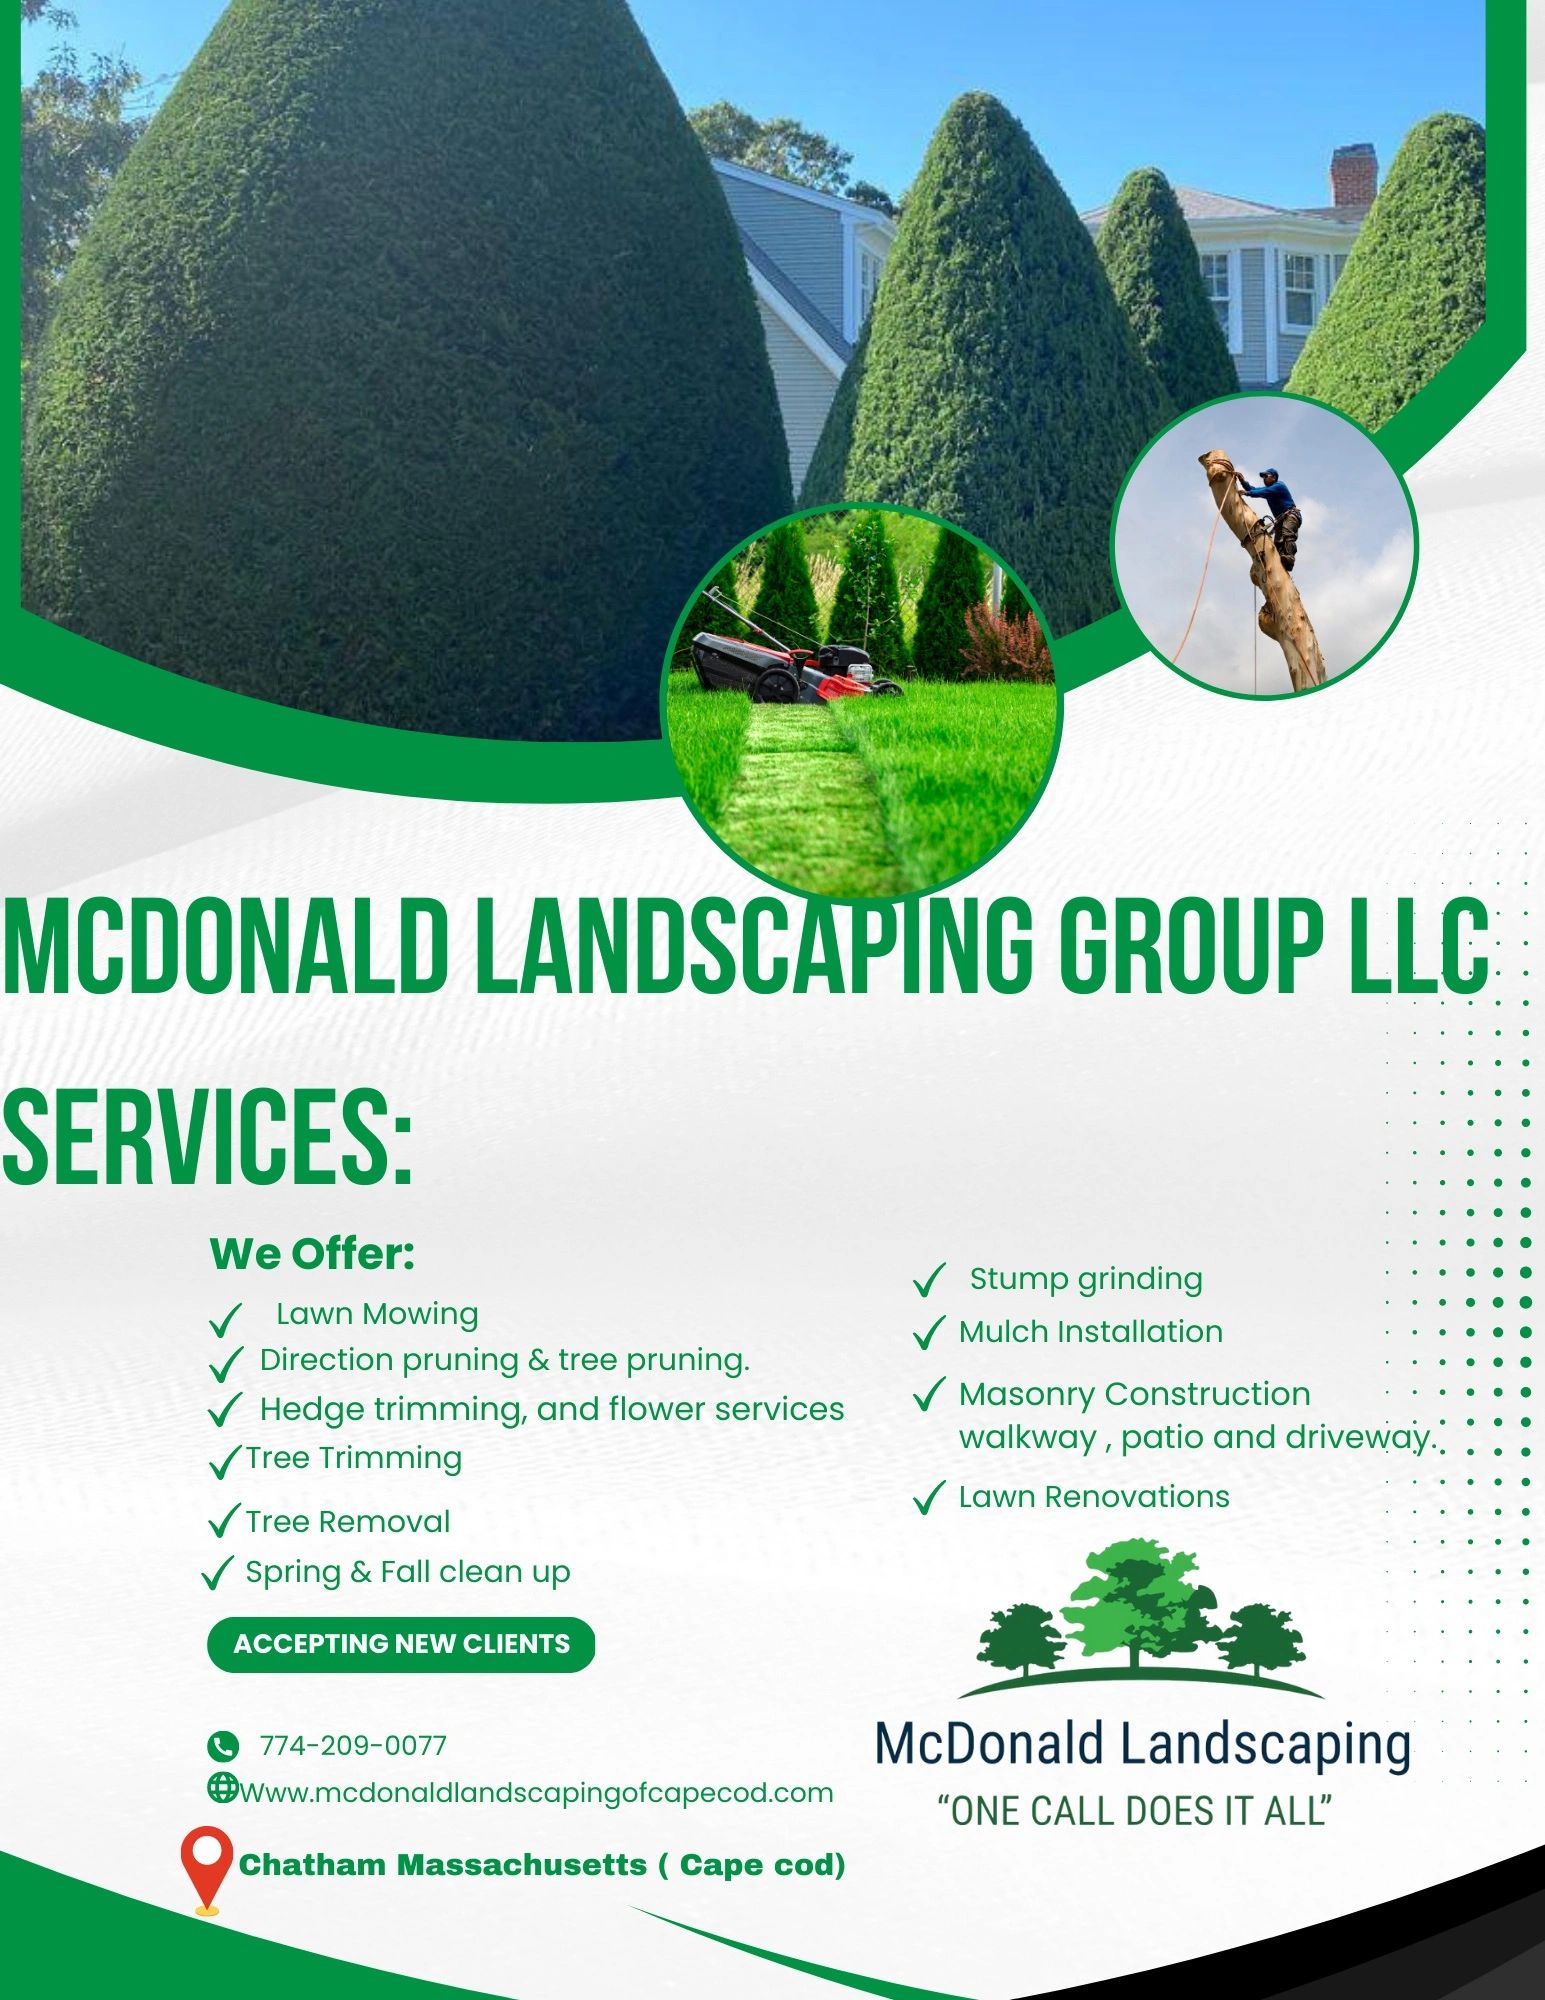 McDonald Landscaping of Cape Cod - Free Estimate., Excellent Work .